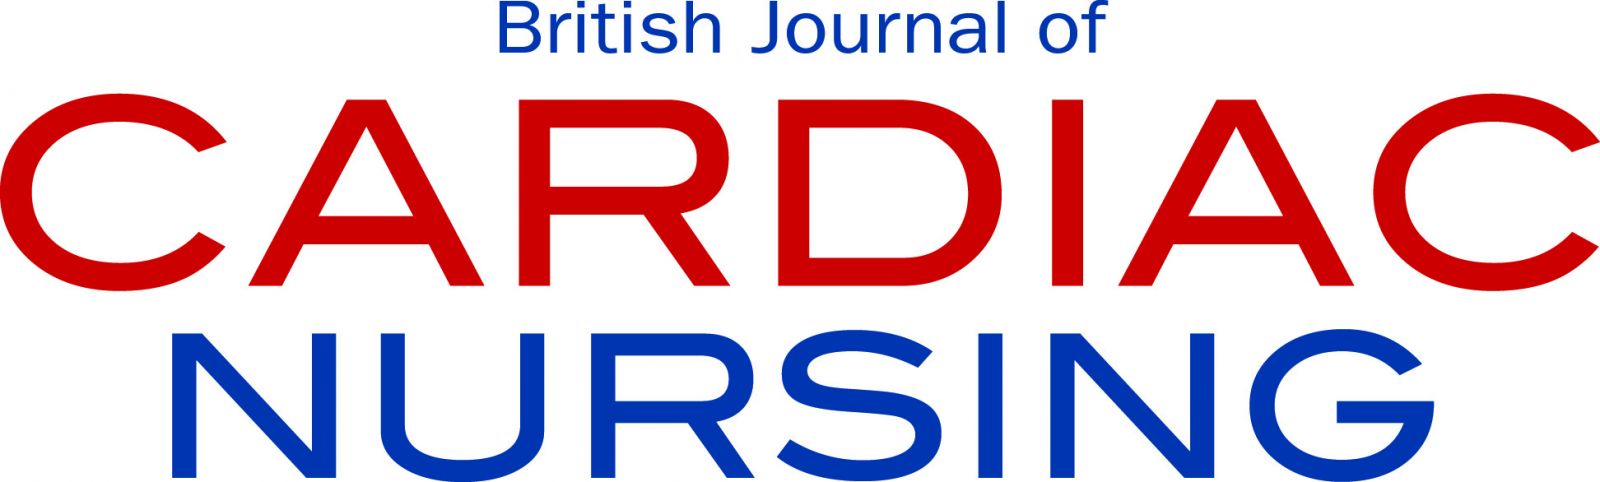 British Journal of Cardiac Nursing